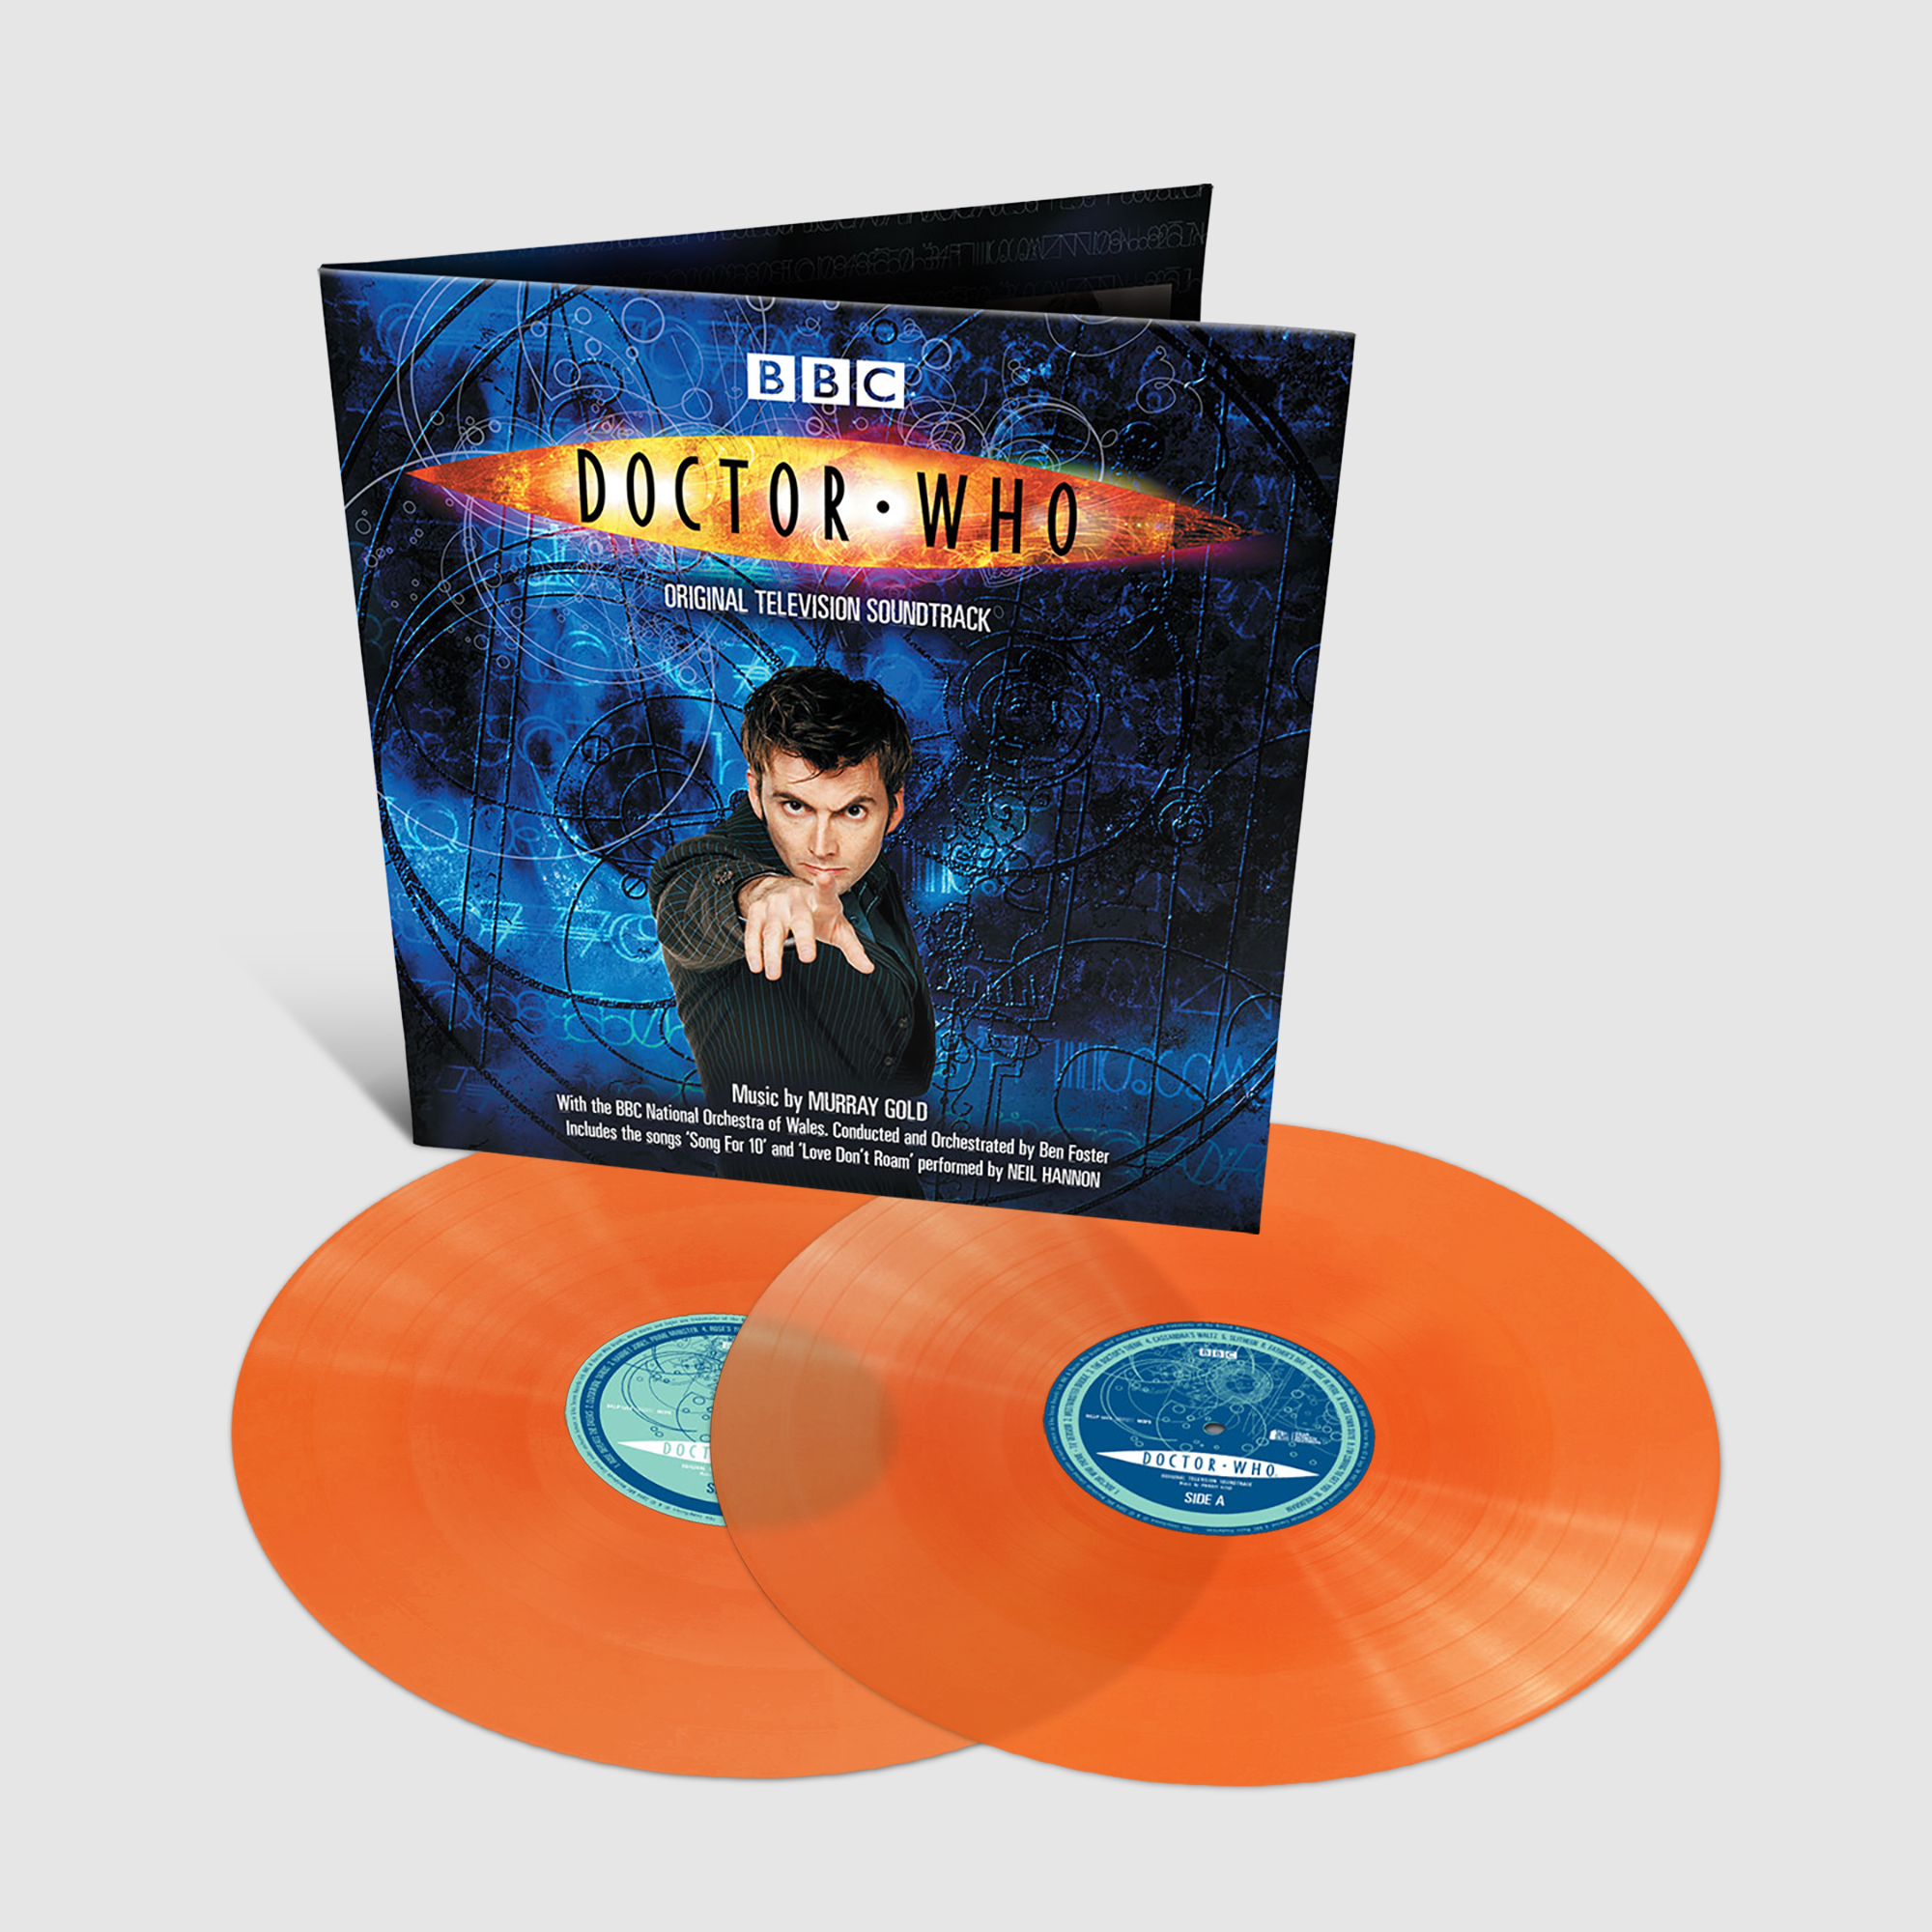 Doctor Who (Original Television Soundtrack) Double LP on transparent orange coloured vinyl